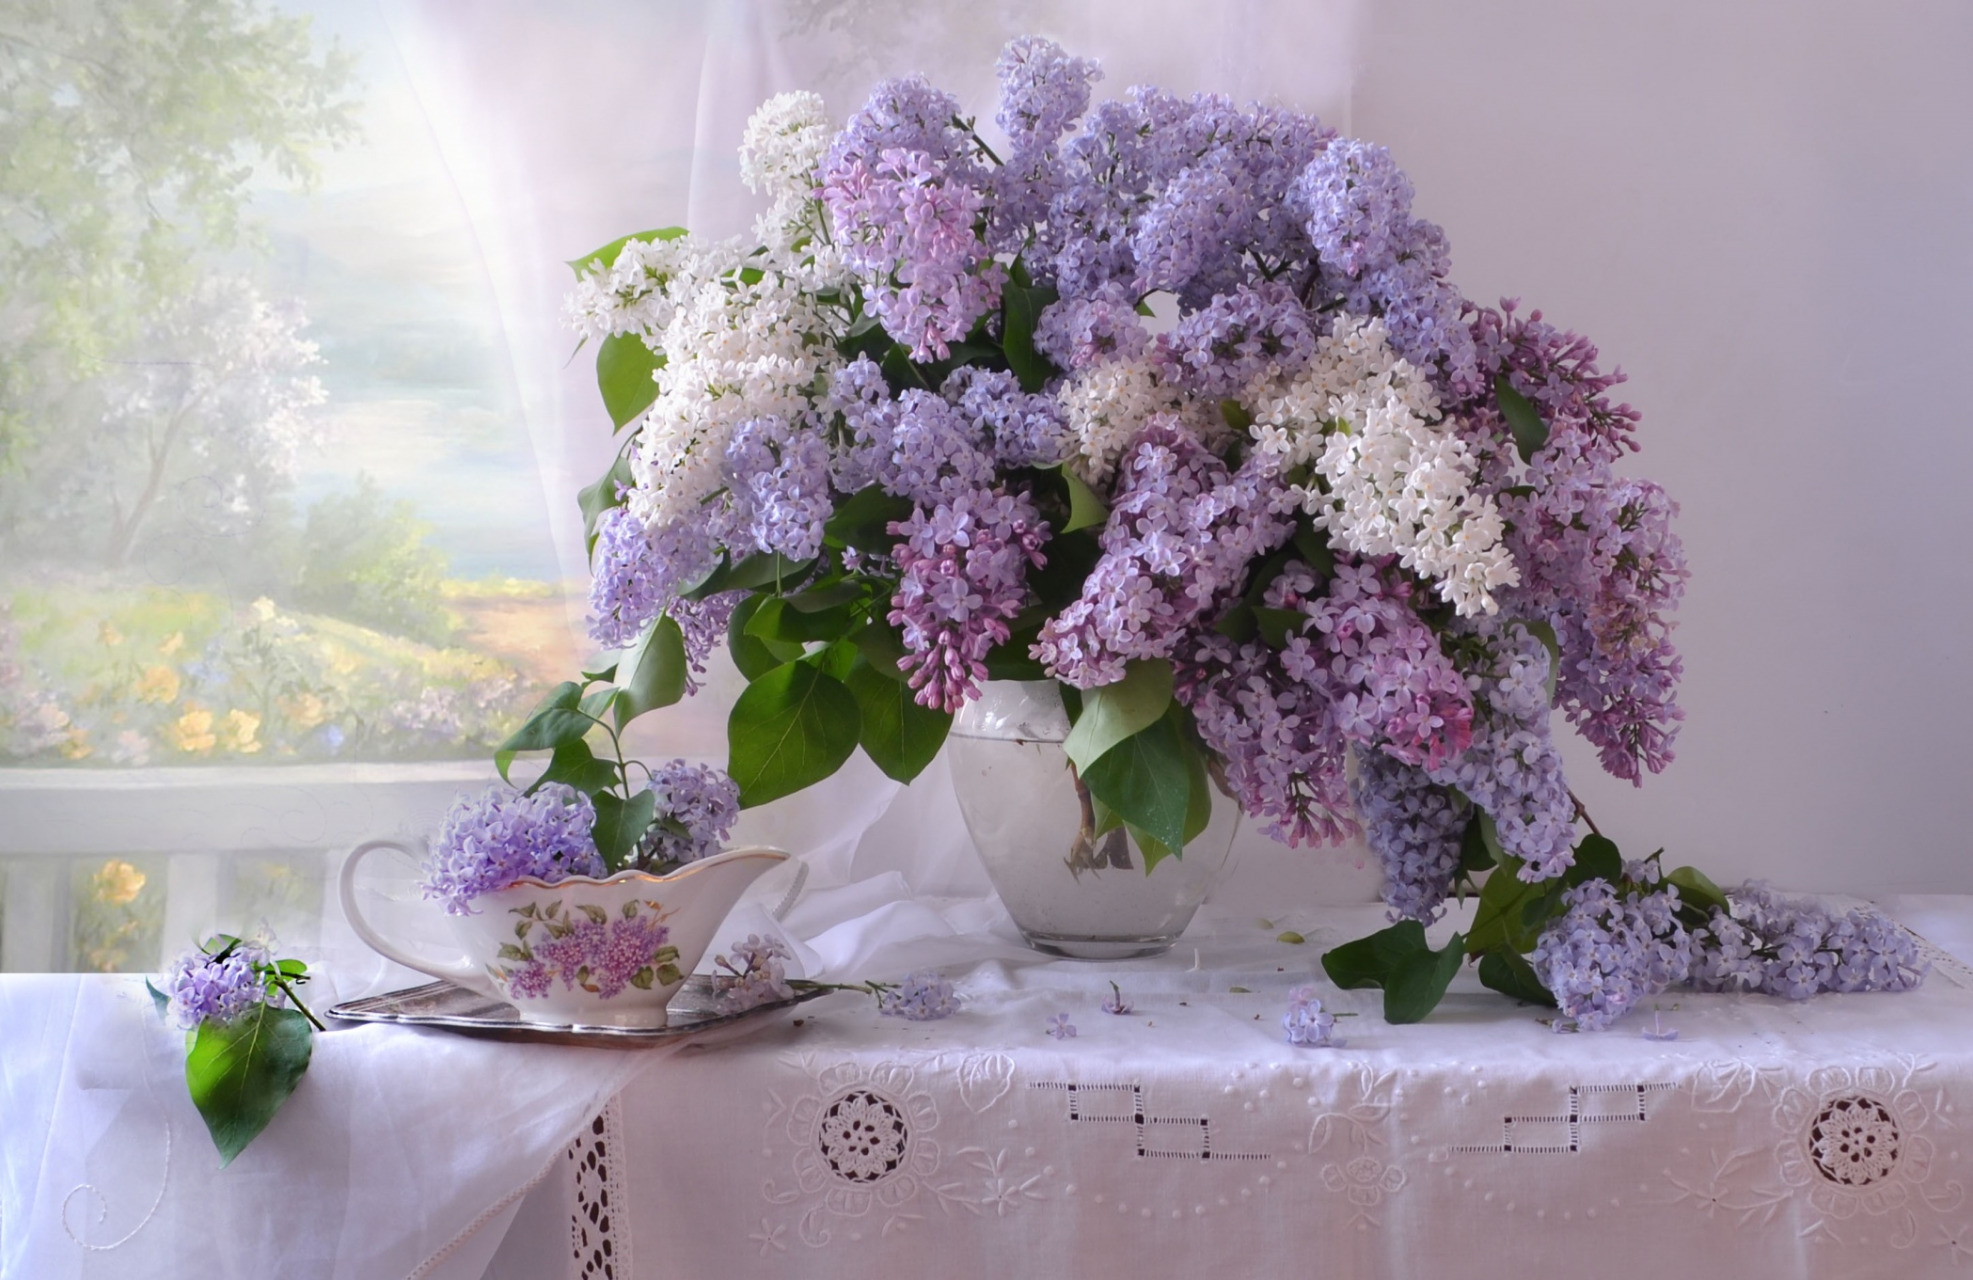 lilac, photography, still life, purple flower, saucer, white flower